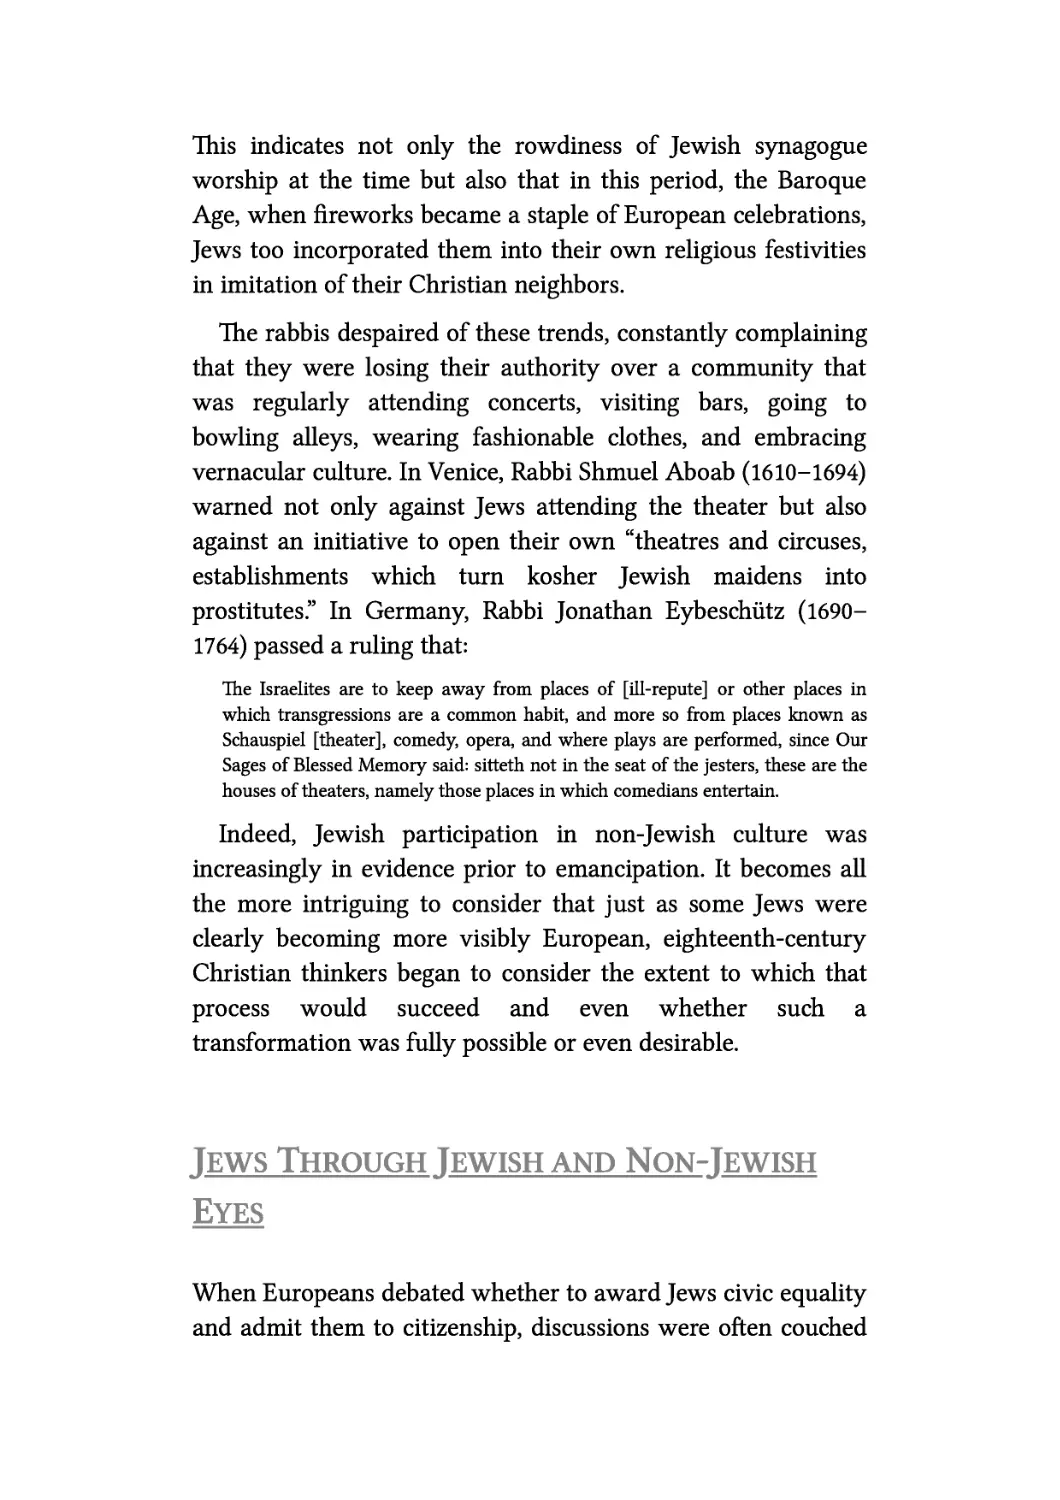 Jews Through Jewish and Non-Jewish Eyes